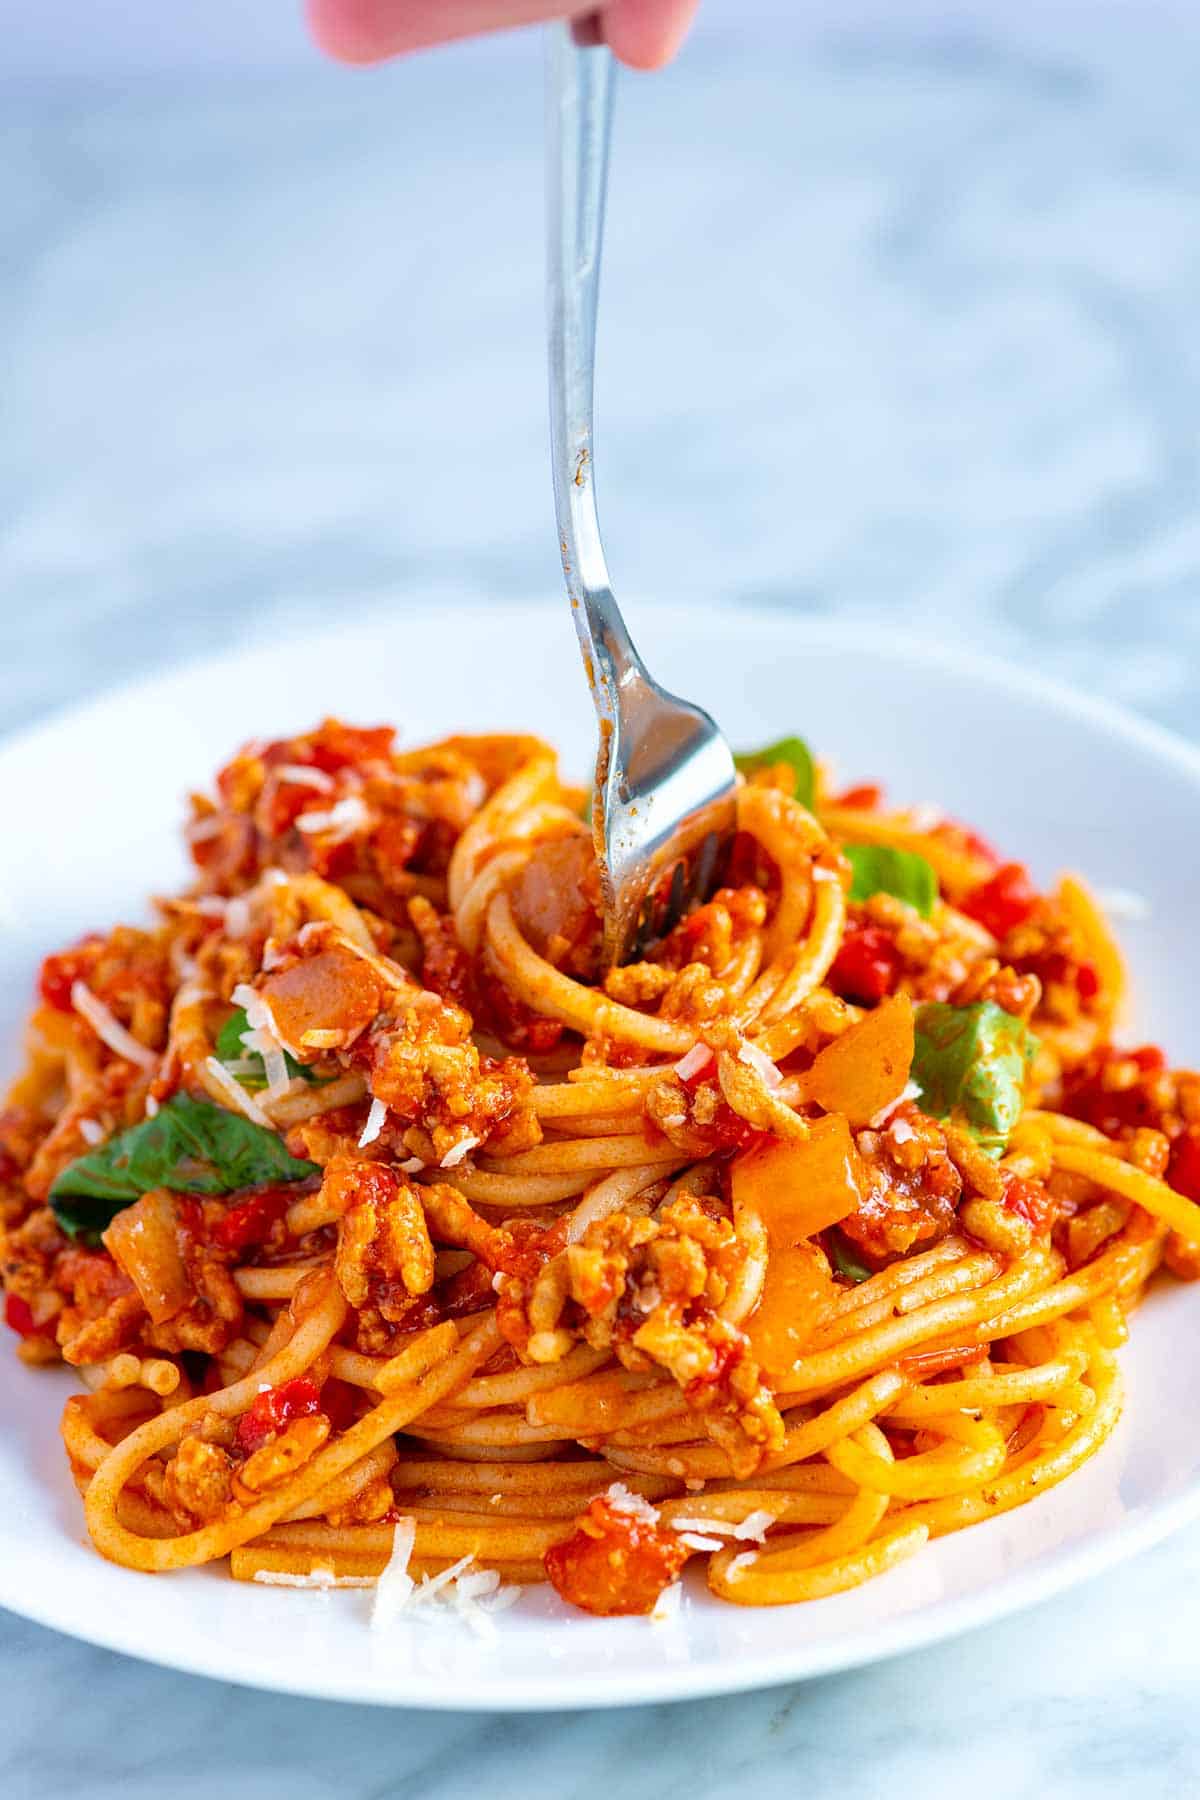 Straightforward Weeknight Spaghetti with Meat Sauce Recipe - Tasty Made ...